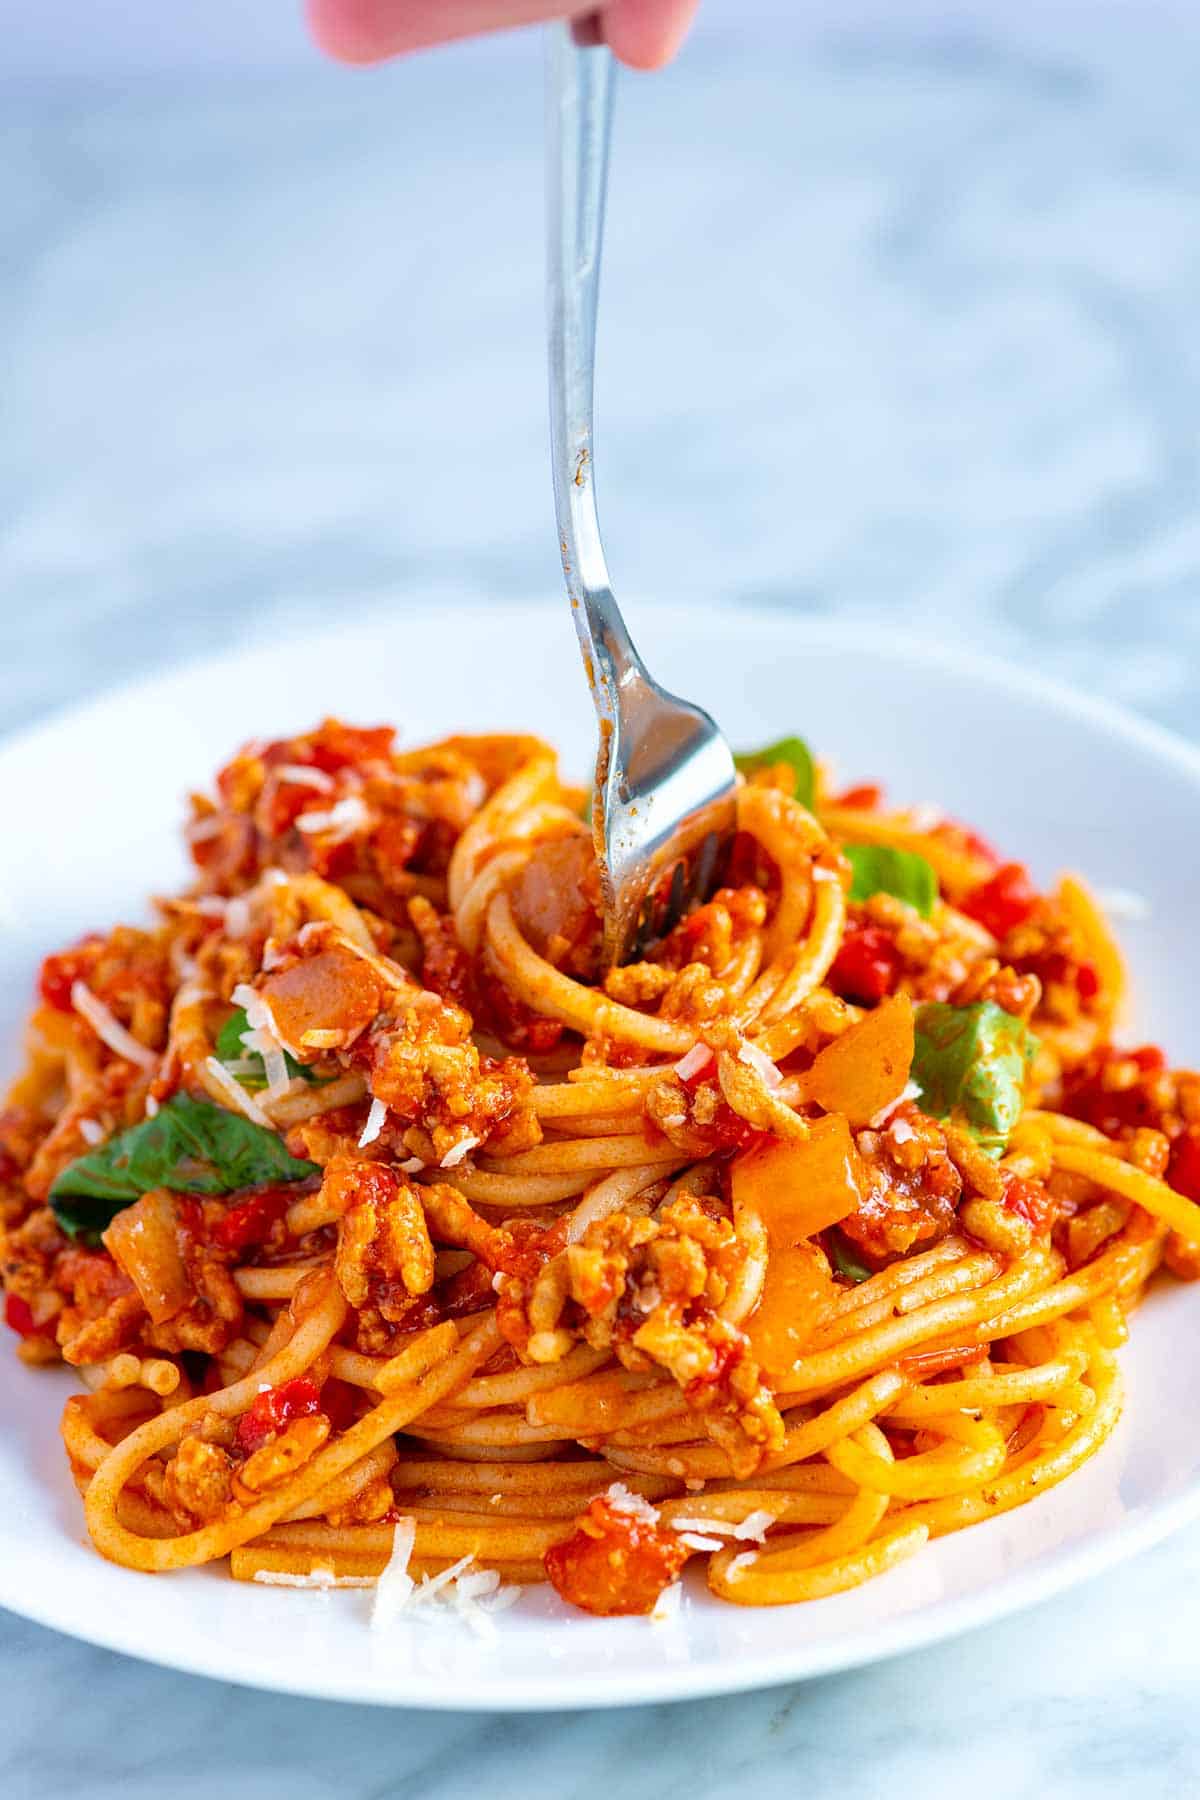 Straightforward Weeknight Spaghetti with Meat Sauce Recipe - Tasty Made ...